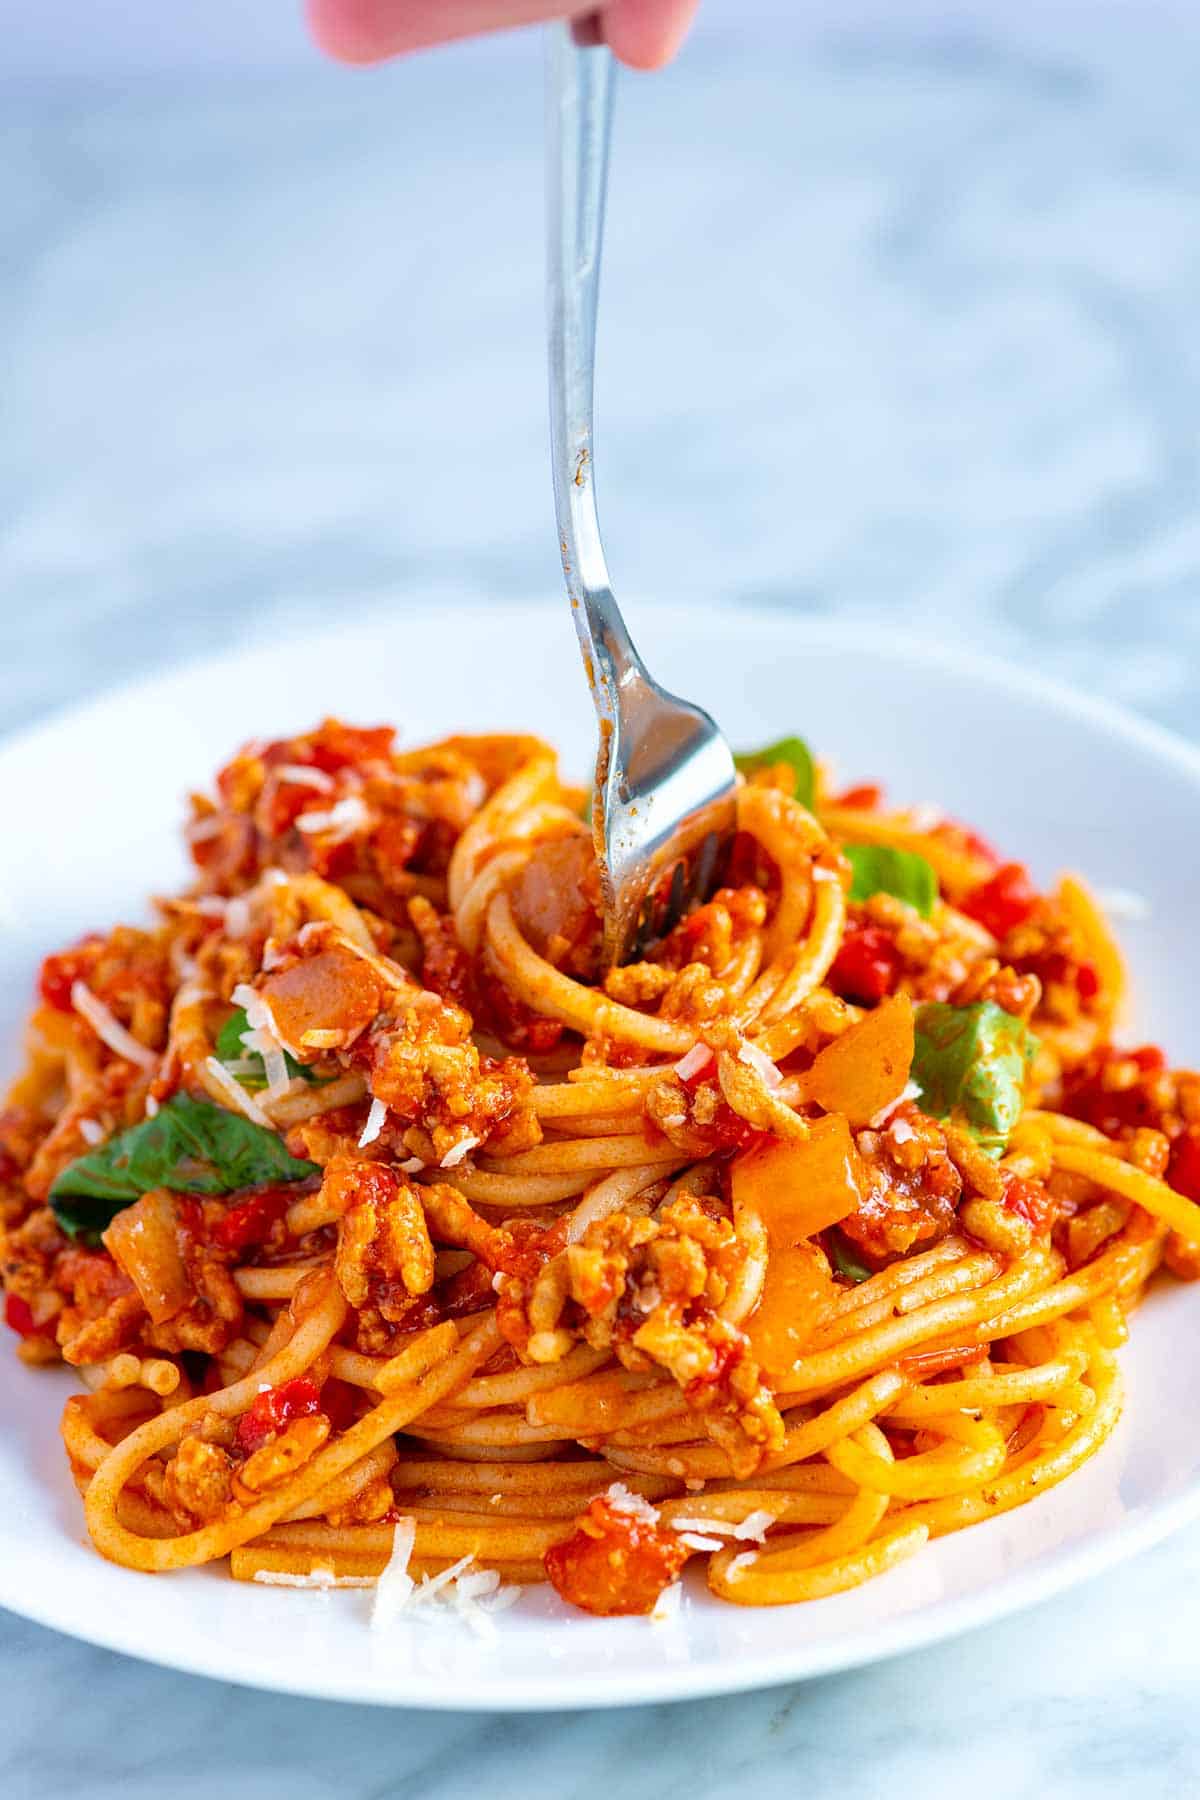 Straightforward Weeknight Spaghetti with Meat Sauce Recipe - Tasty Made ...